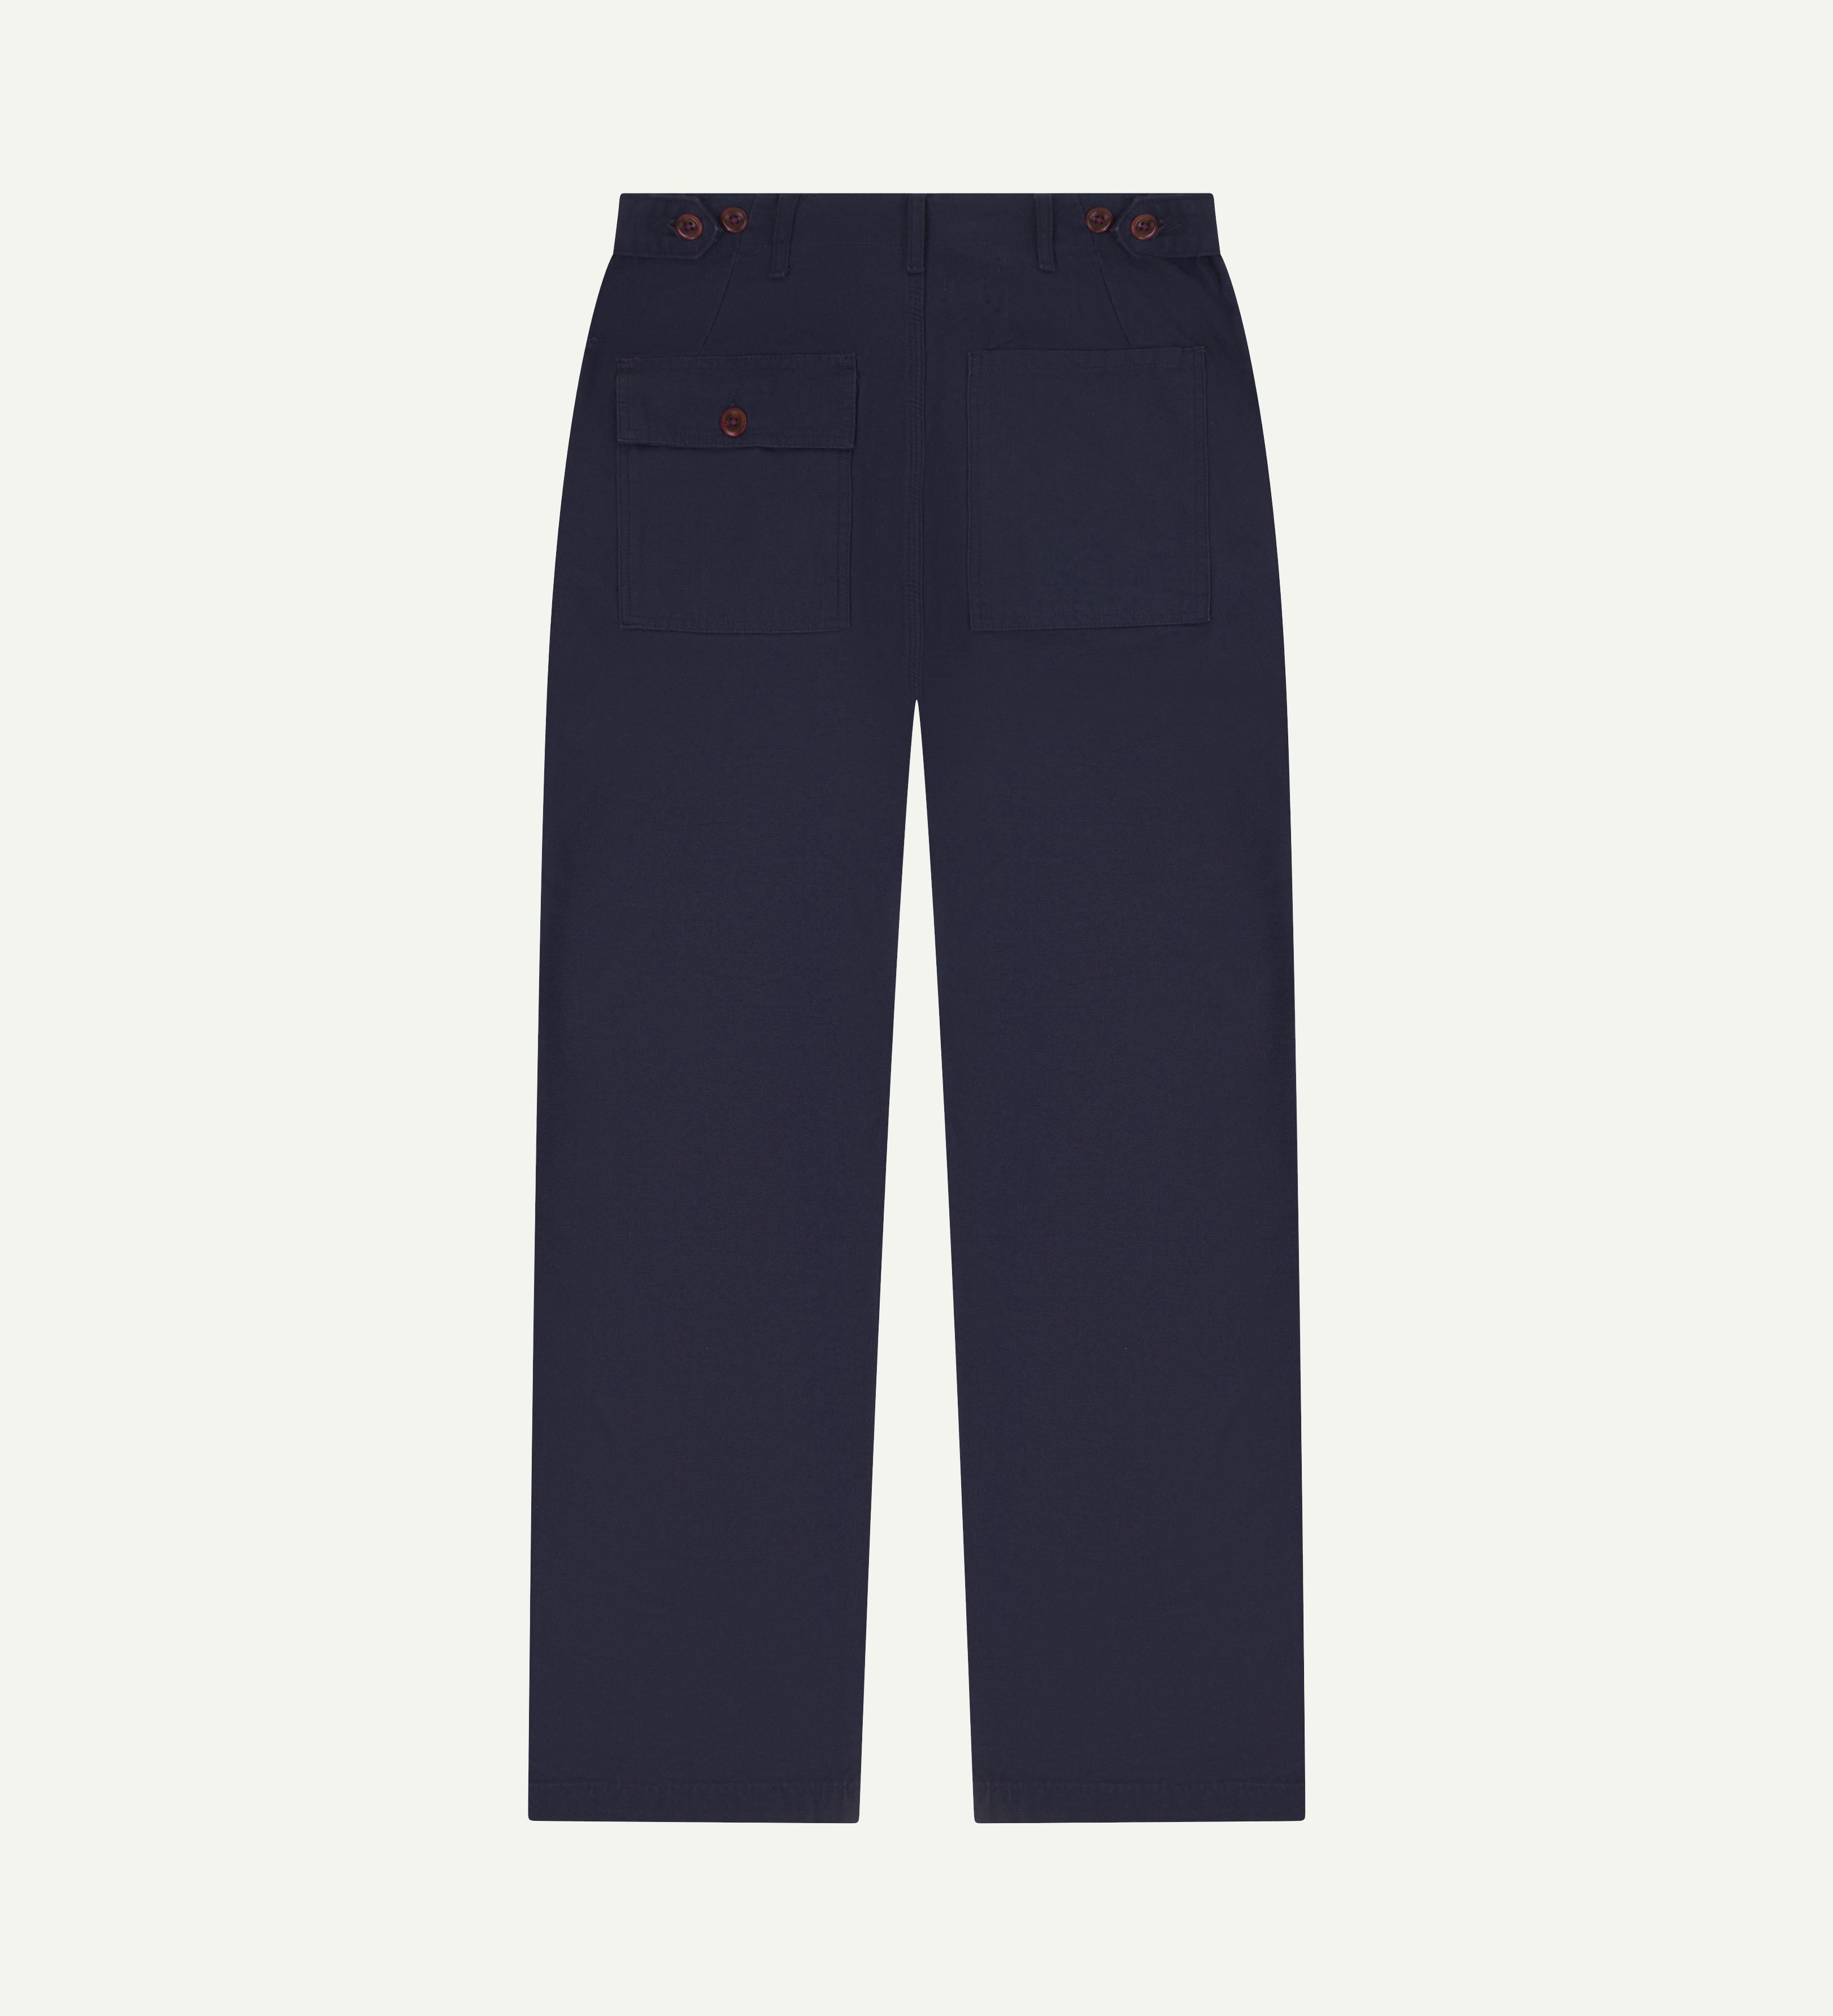 Back flat shot of uskees #5005 men's trousers in dark blue showing back pocket and waist adjuster buttons